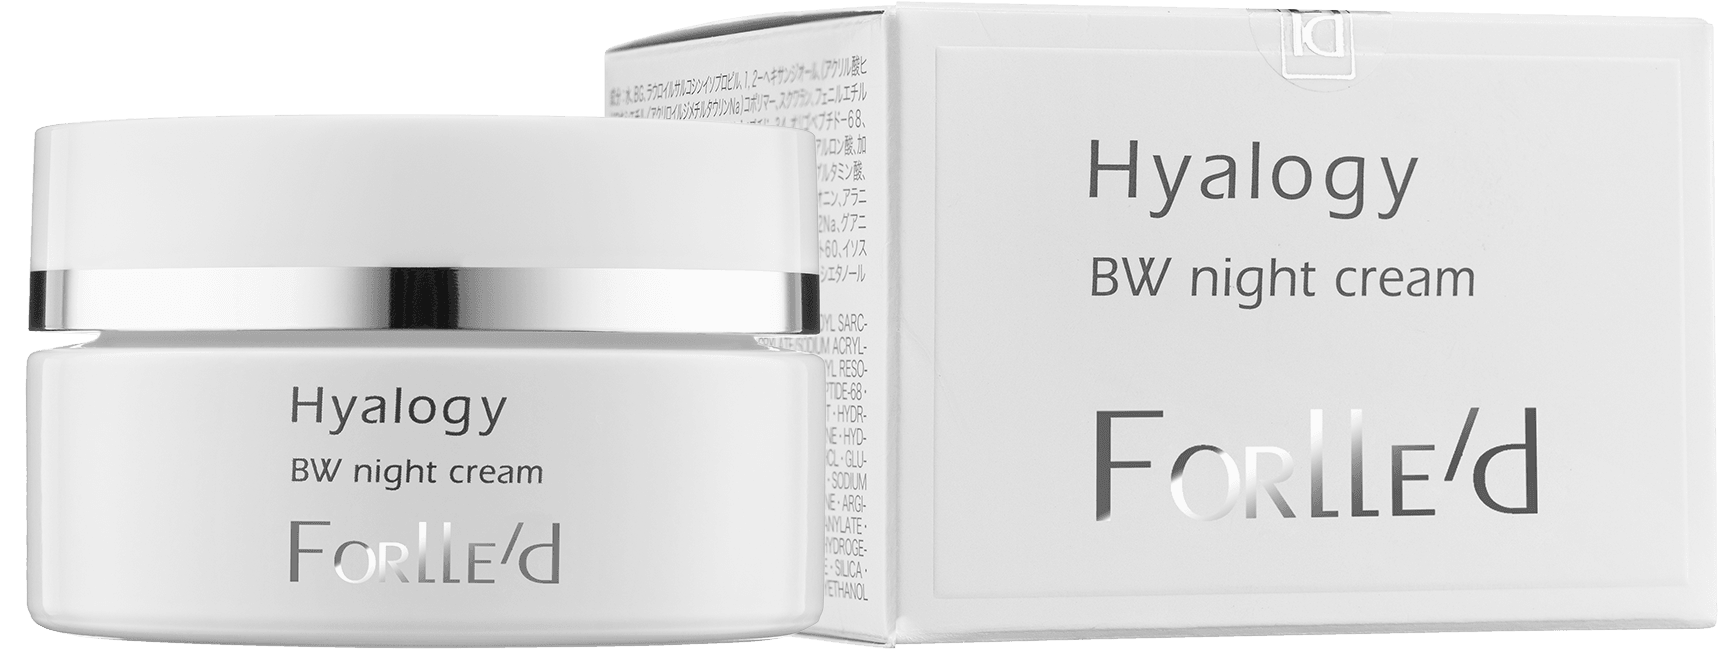 Forlled Hyalogy BW Night Cream 50 gr